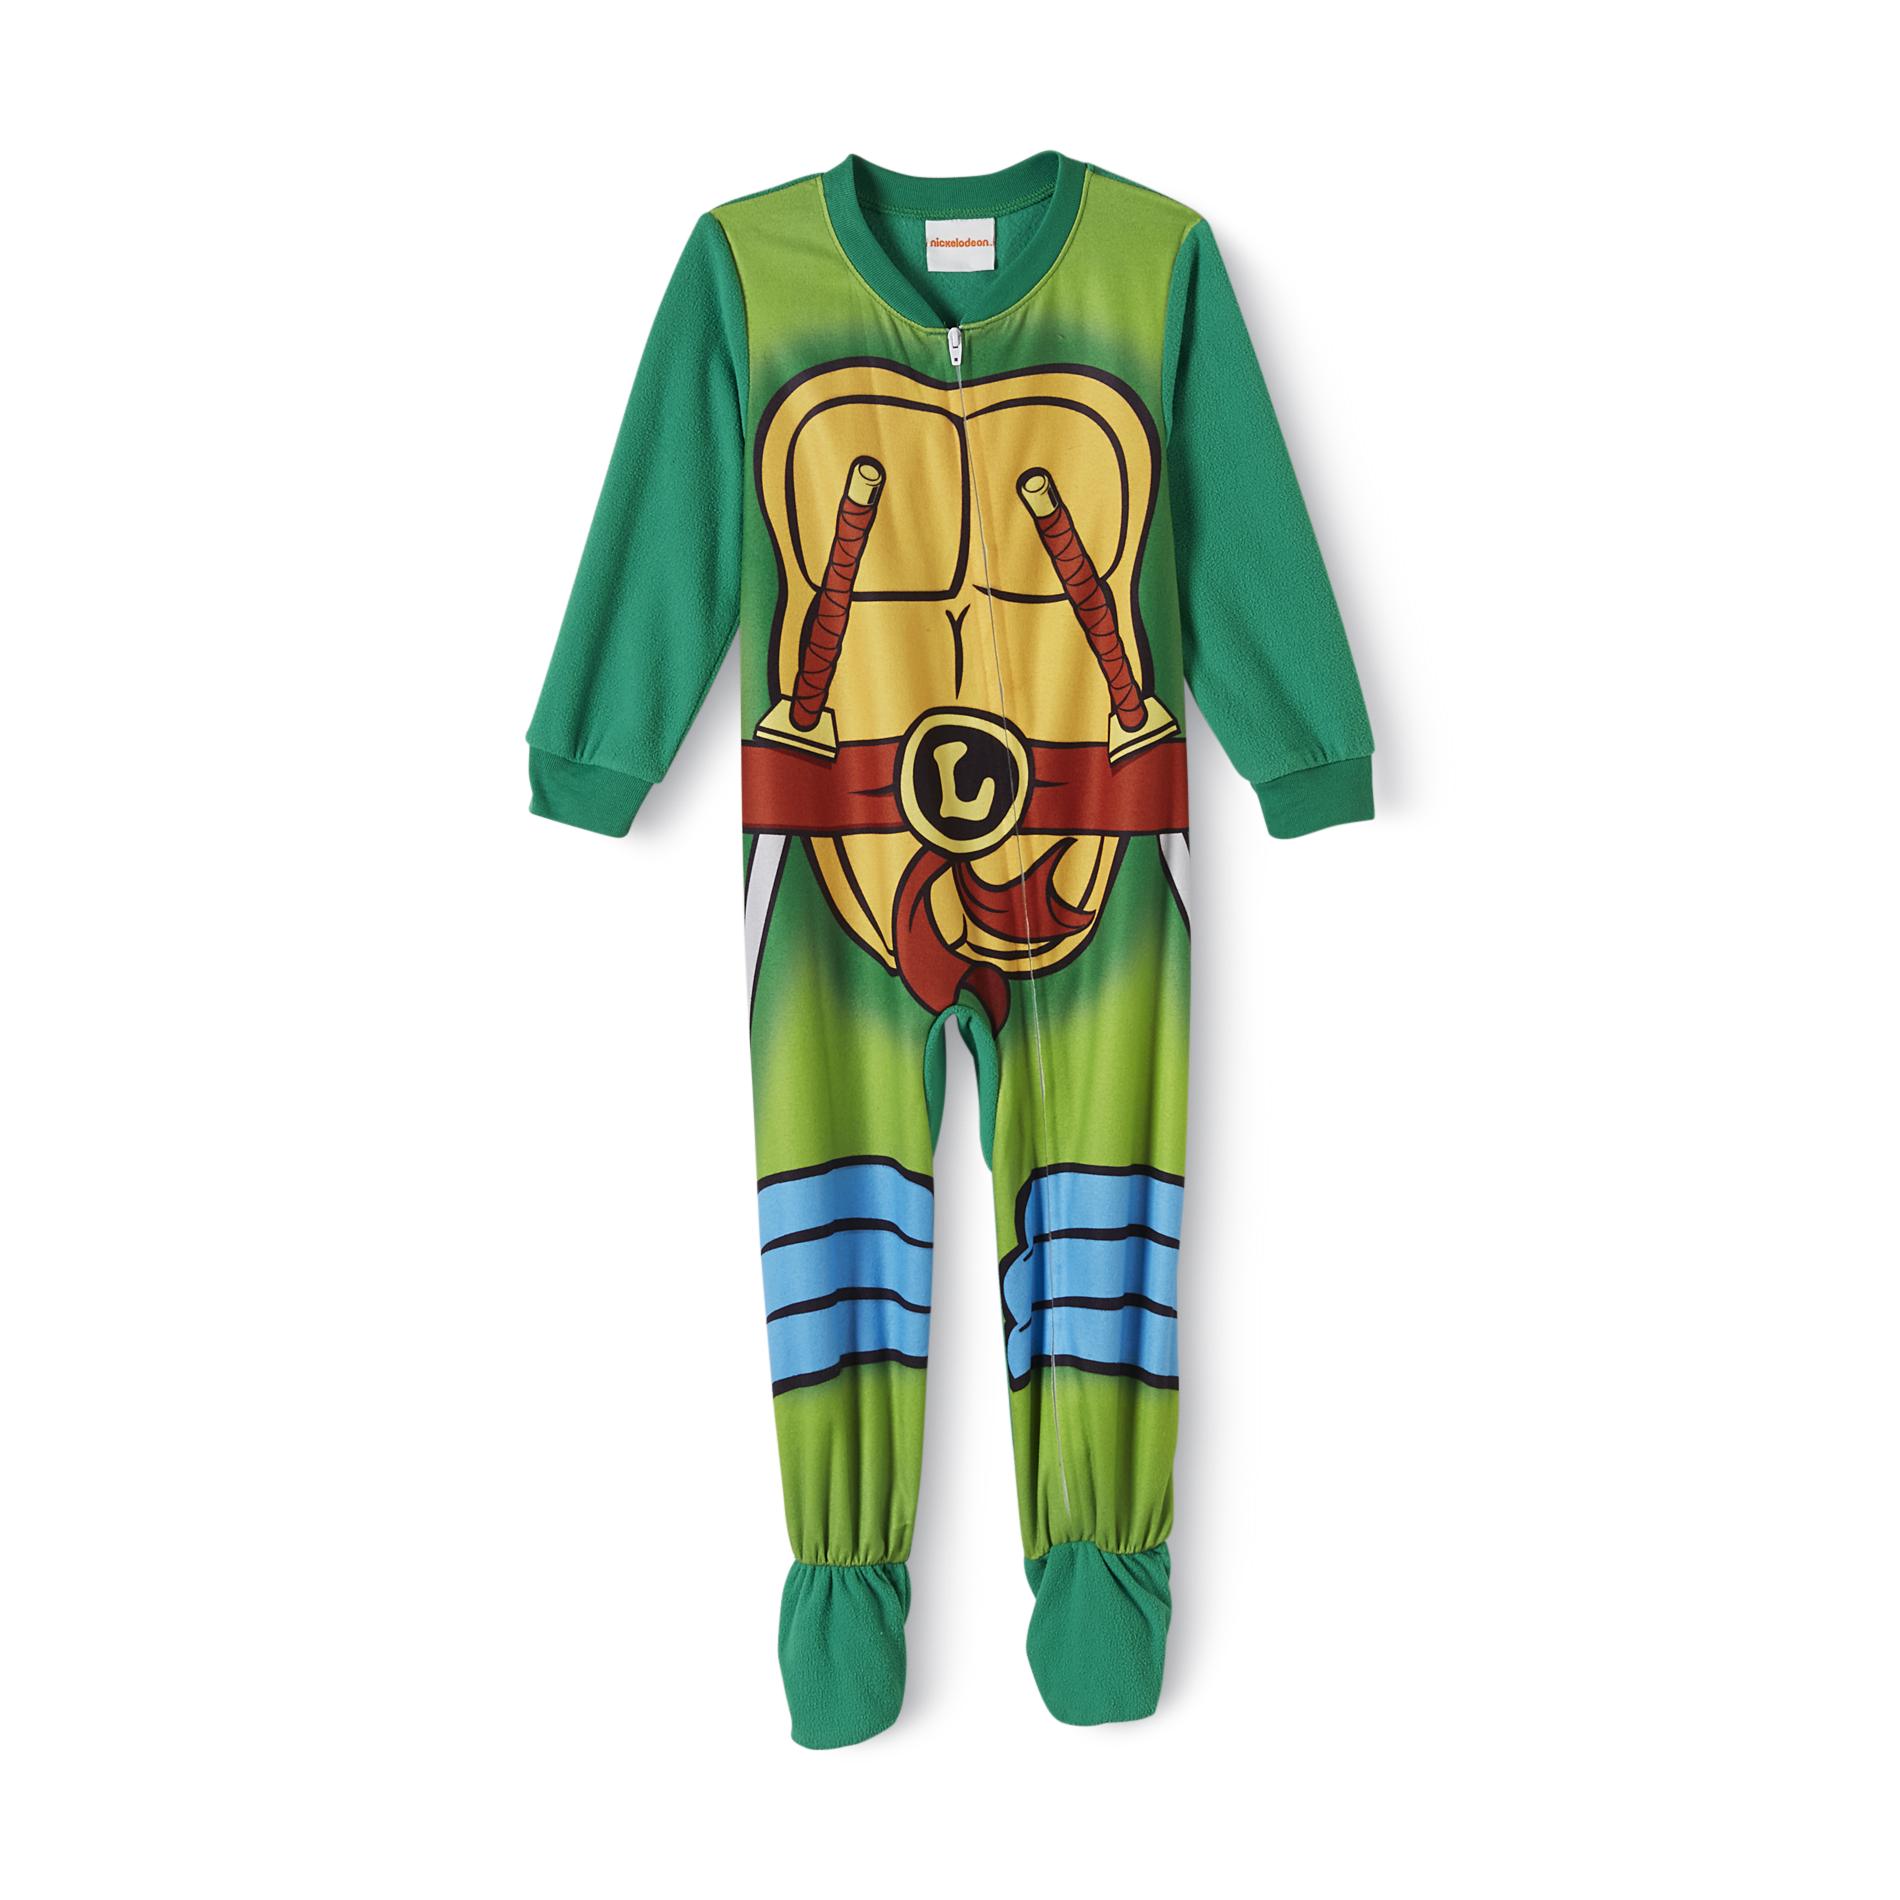 Nickelodeon Teenage Mutant Ninja Turtles Toddler Boy's Footed Sleeper Pajamas